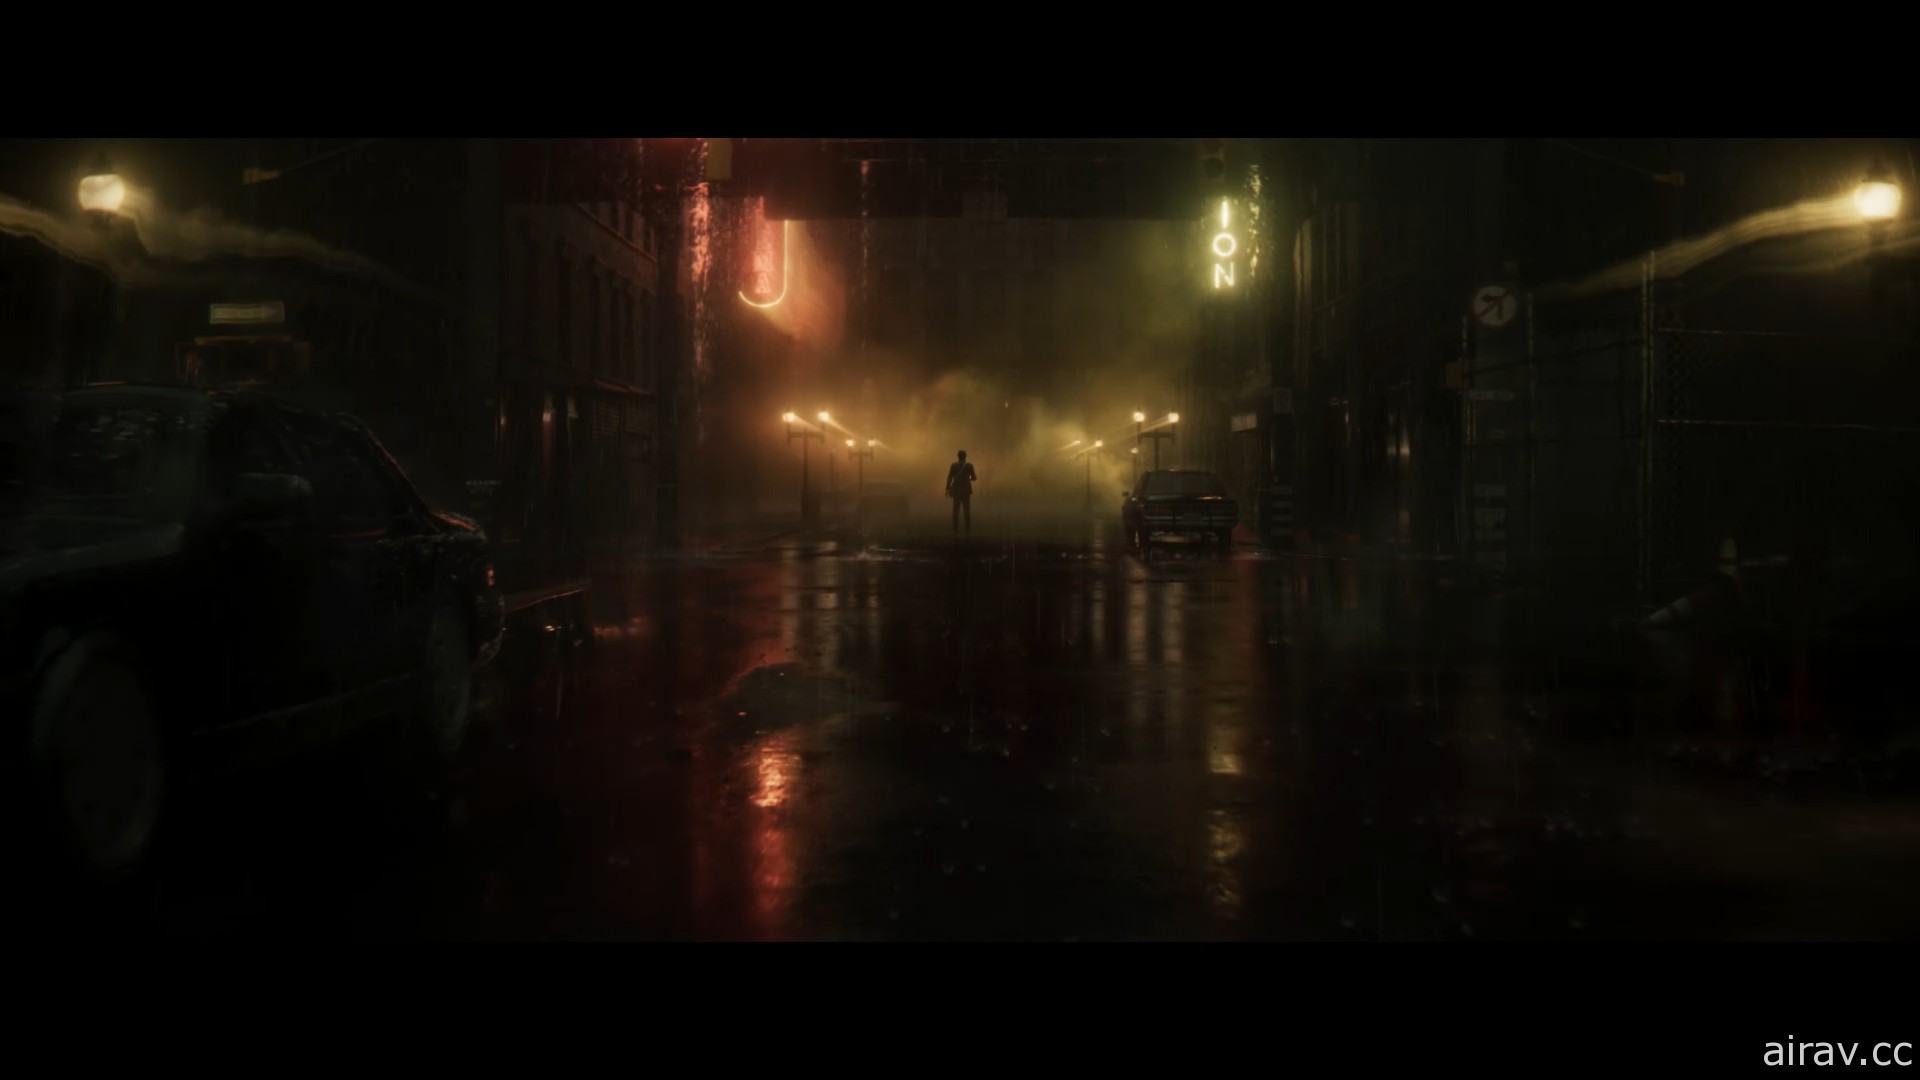 【TGA 21】《心靈殺手》續作《心靈殺手 2》預計 2023 年推出 釋出預告影片